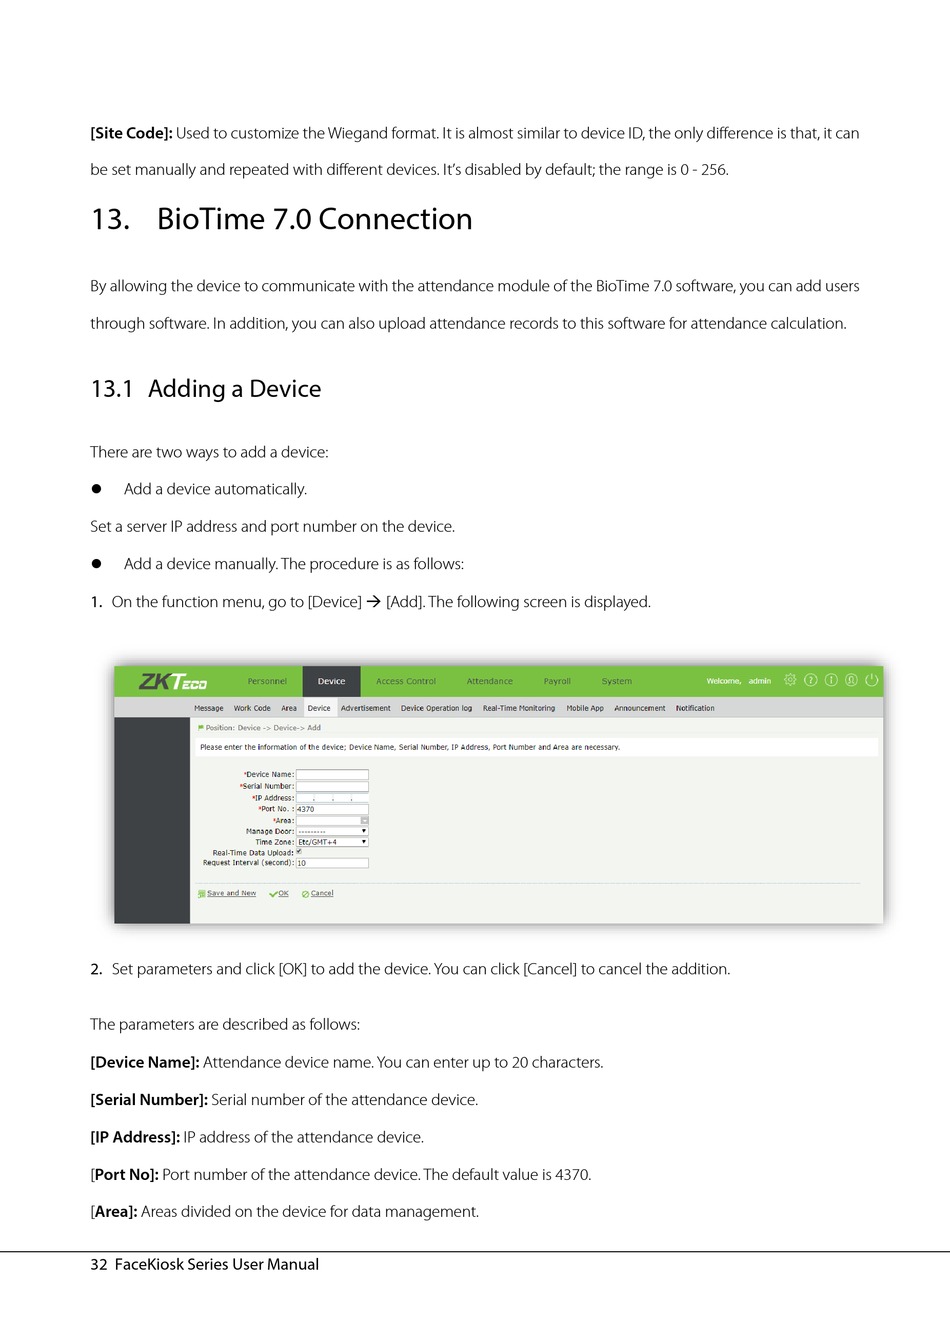 Biotime 7.0 Connection; Adding A Device - ZKTeco FaceKiosk ...